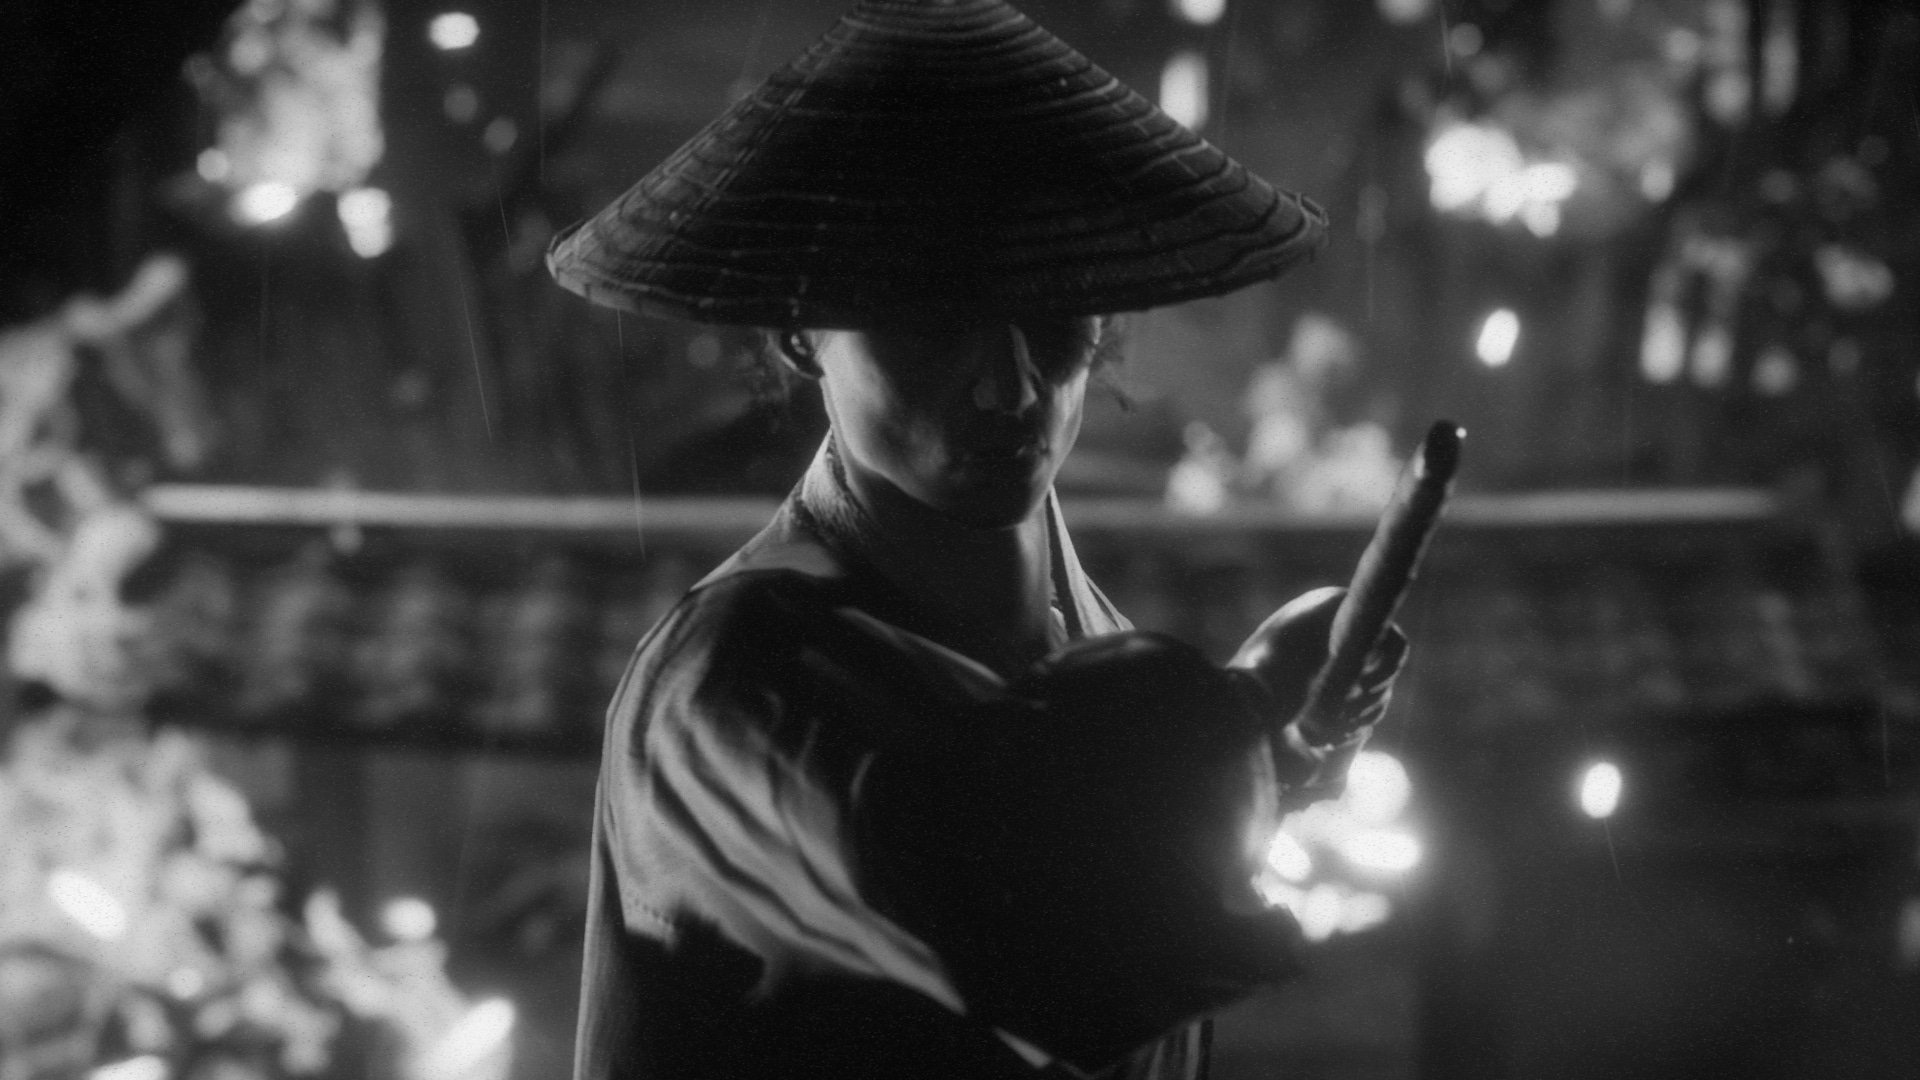 Trek to Yomi: The game impressively emulating the look of Japanese films directed by Akira Kurosawa. 1920x1080 Full HD Background.